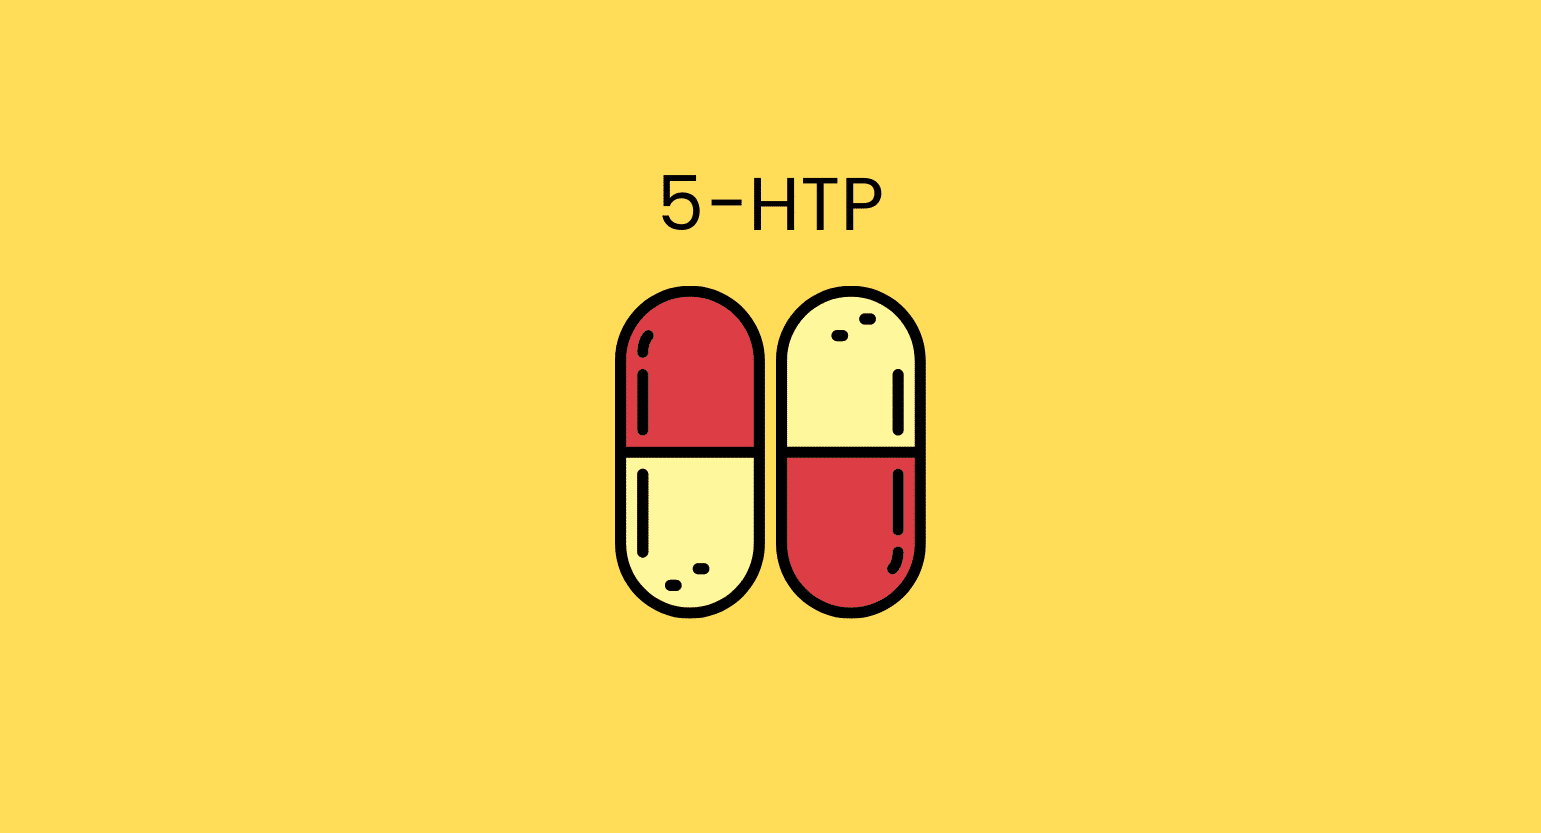 Kratom & 5-HTP (Oxytriptan): Is This Combo Helpful or Dangerous?